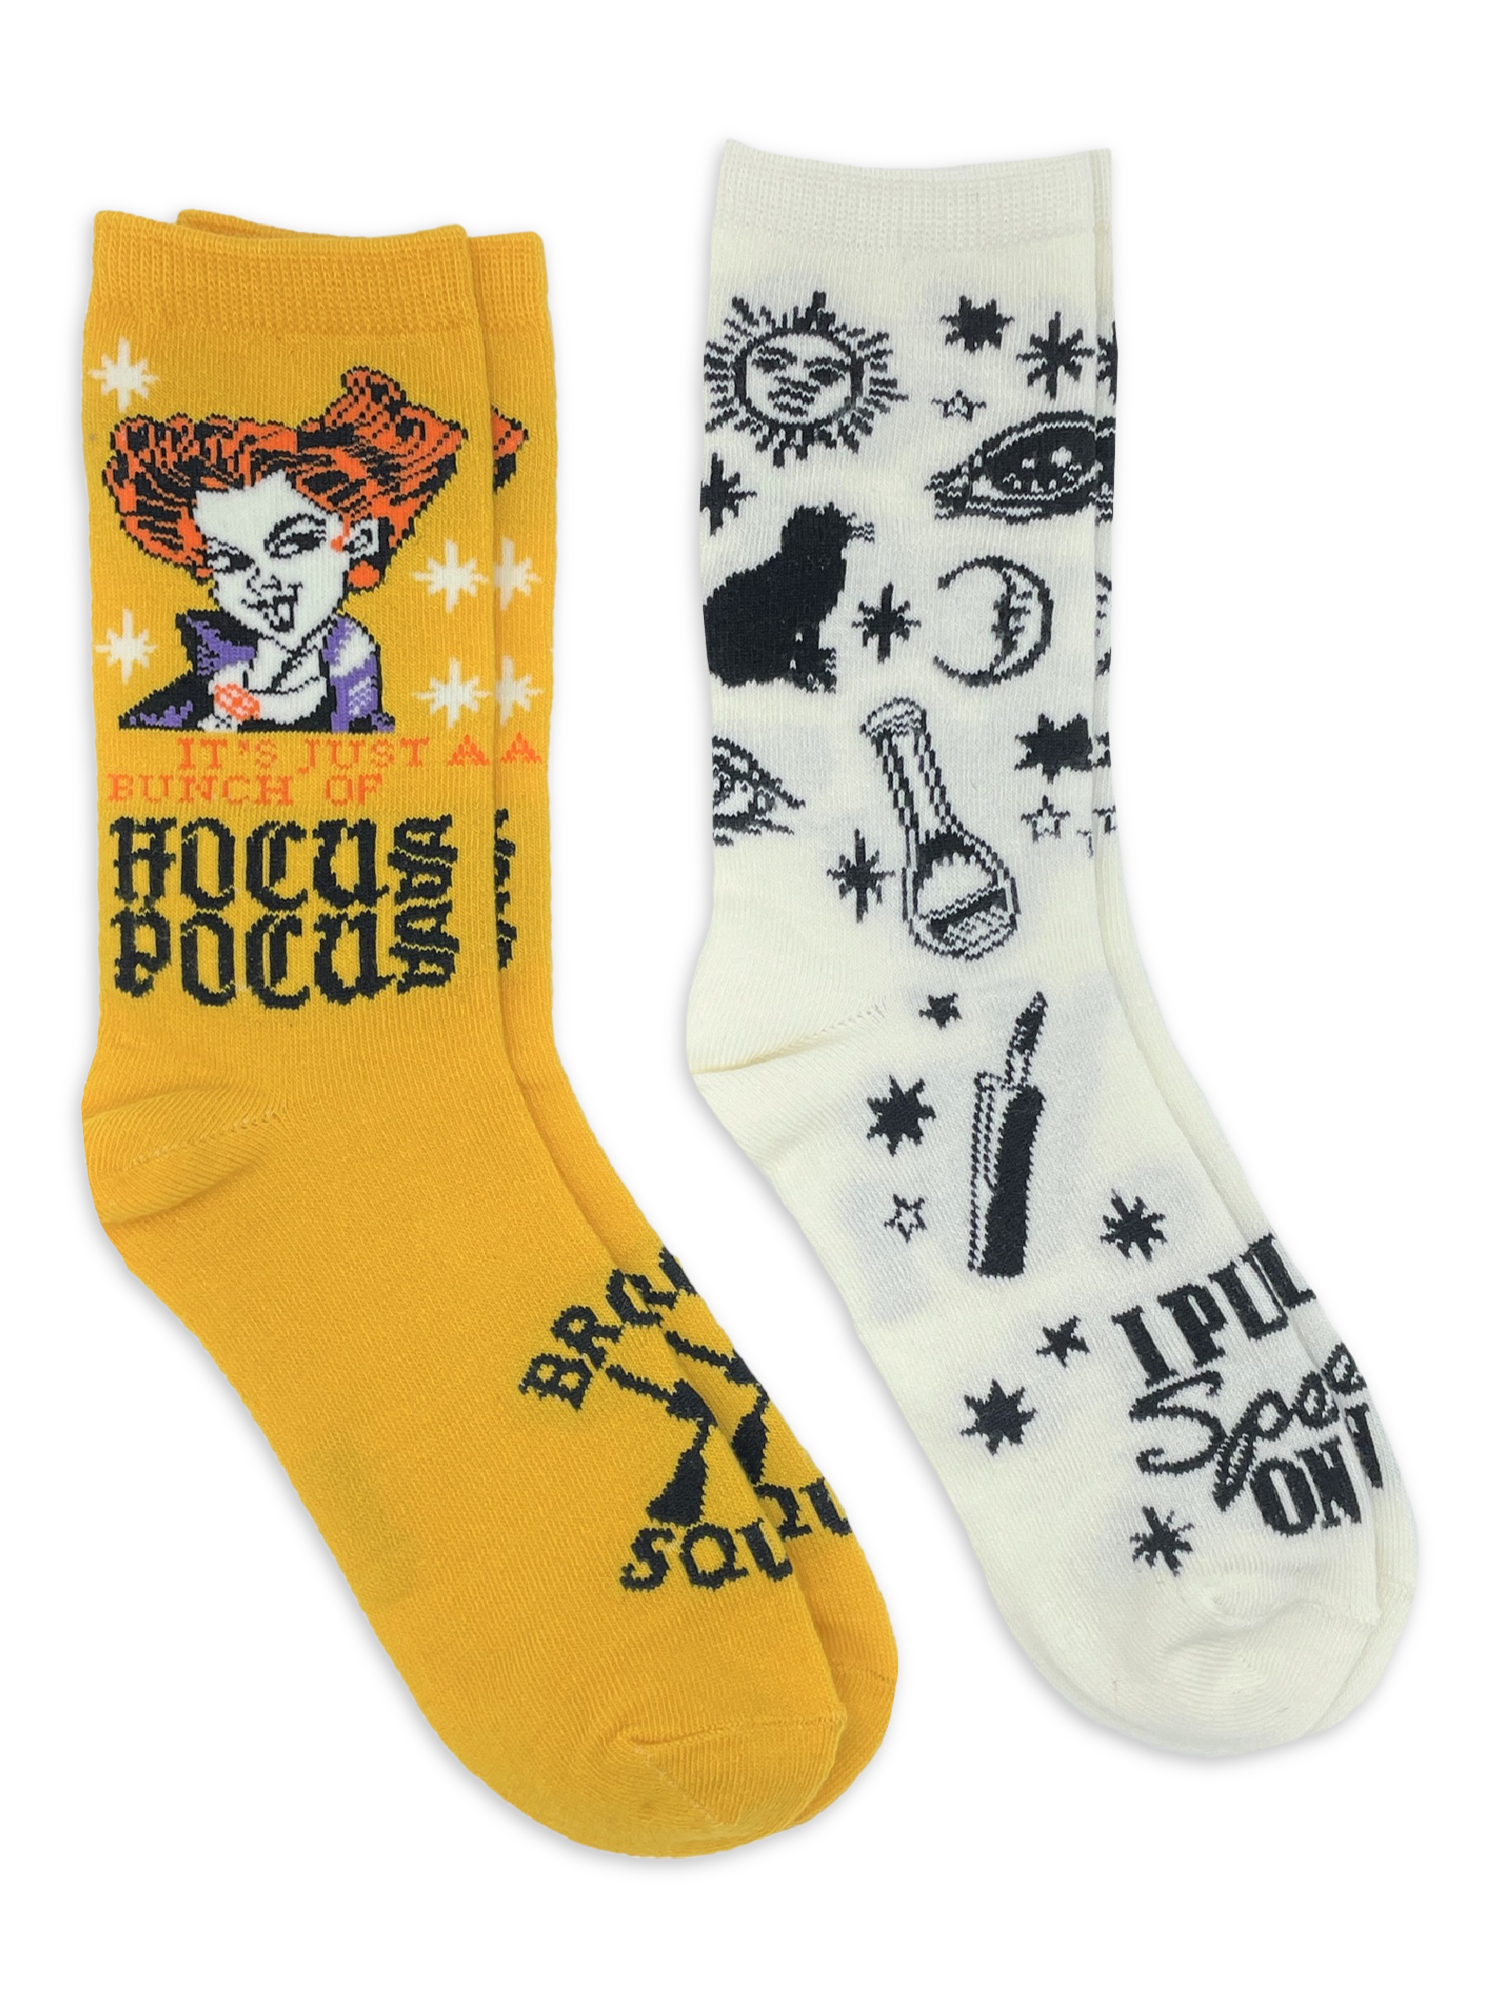 Hocus Pocus Women's Halloween Crew Socks, 2-Pack, Size 4-10 - image 1 of 7